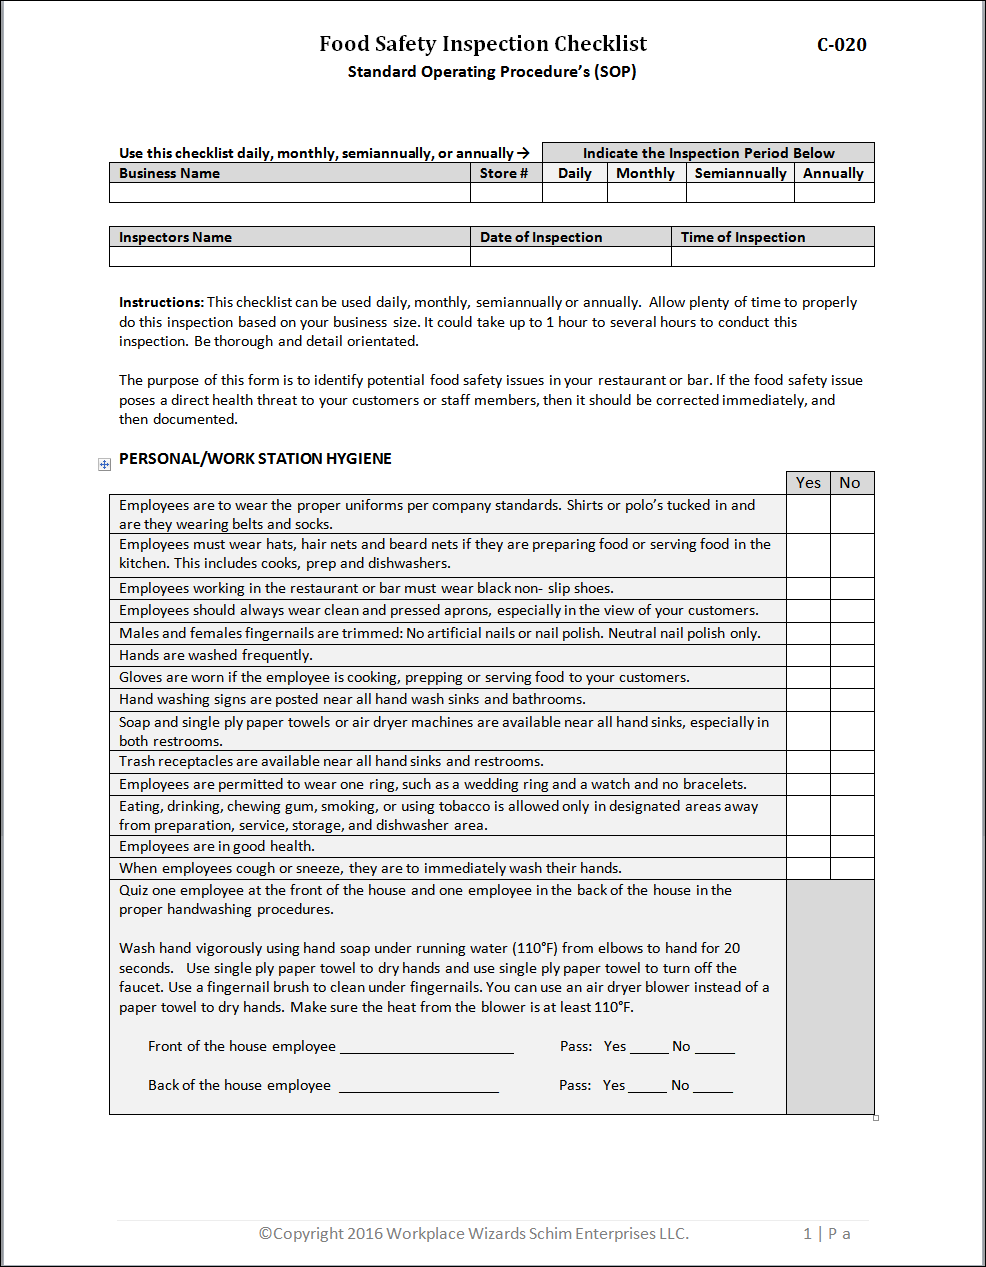 Food Safety Inspection Checklist - Workplacewizards restaurant  With Regard To Food Safety Inspection Checklist Template Pertaining To Food Safety Inspection Checklist Template